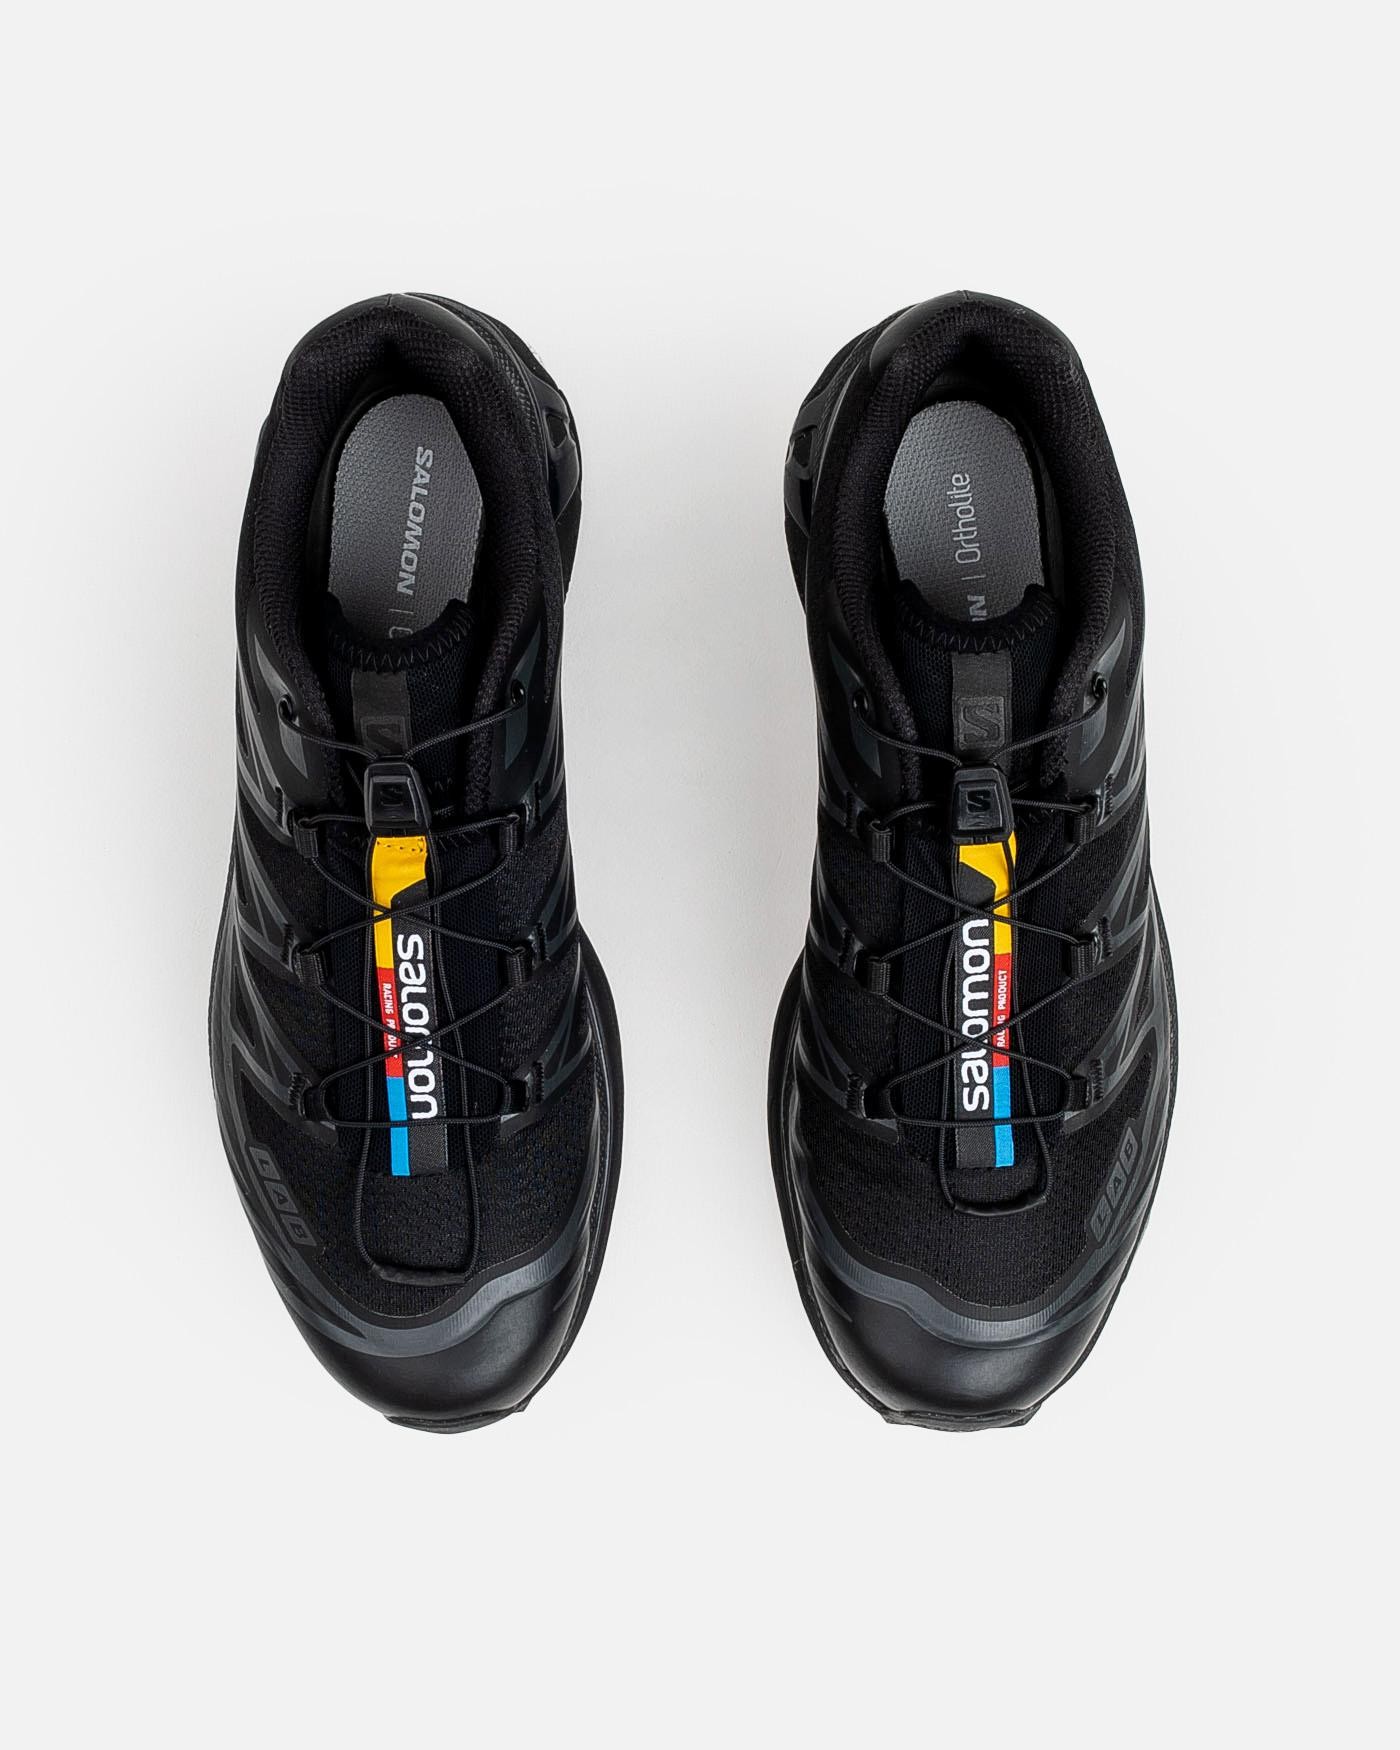 salomon-zapatillas-xt-4-ebony-silver-sneakers-black-negras-7